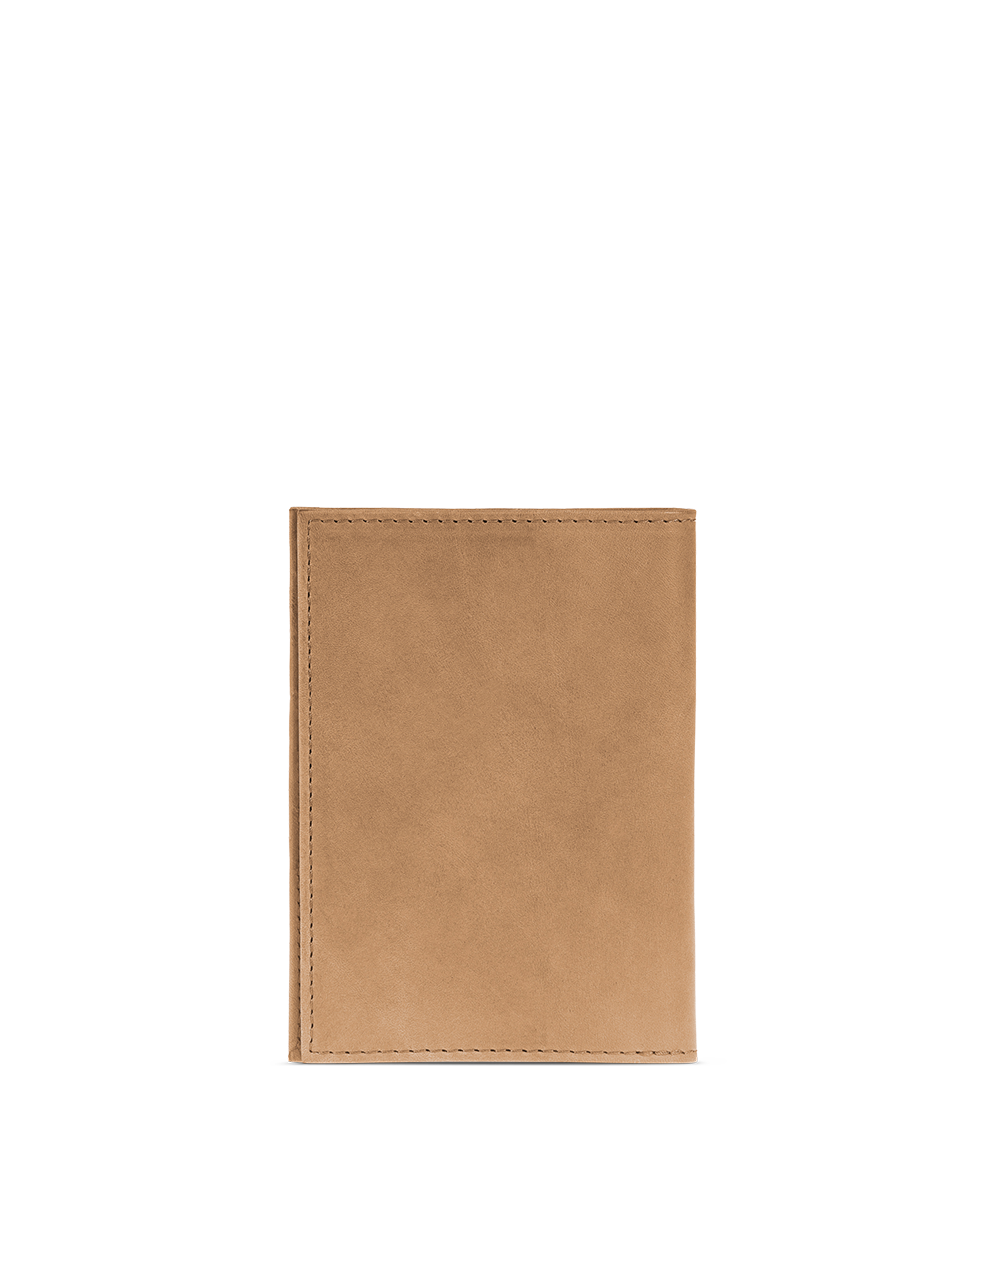 Passport Holder Camel Hunter Leather. Small rectangular passport holder for travelling. Front product image